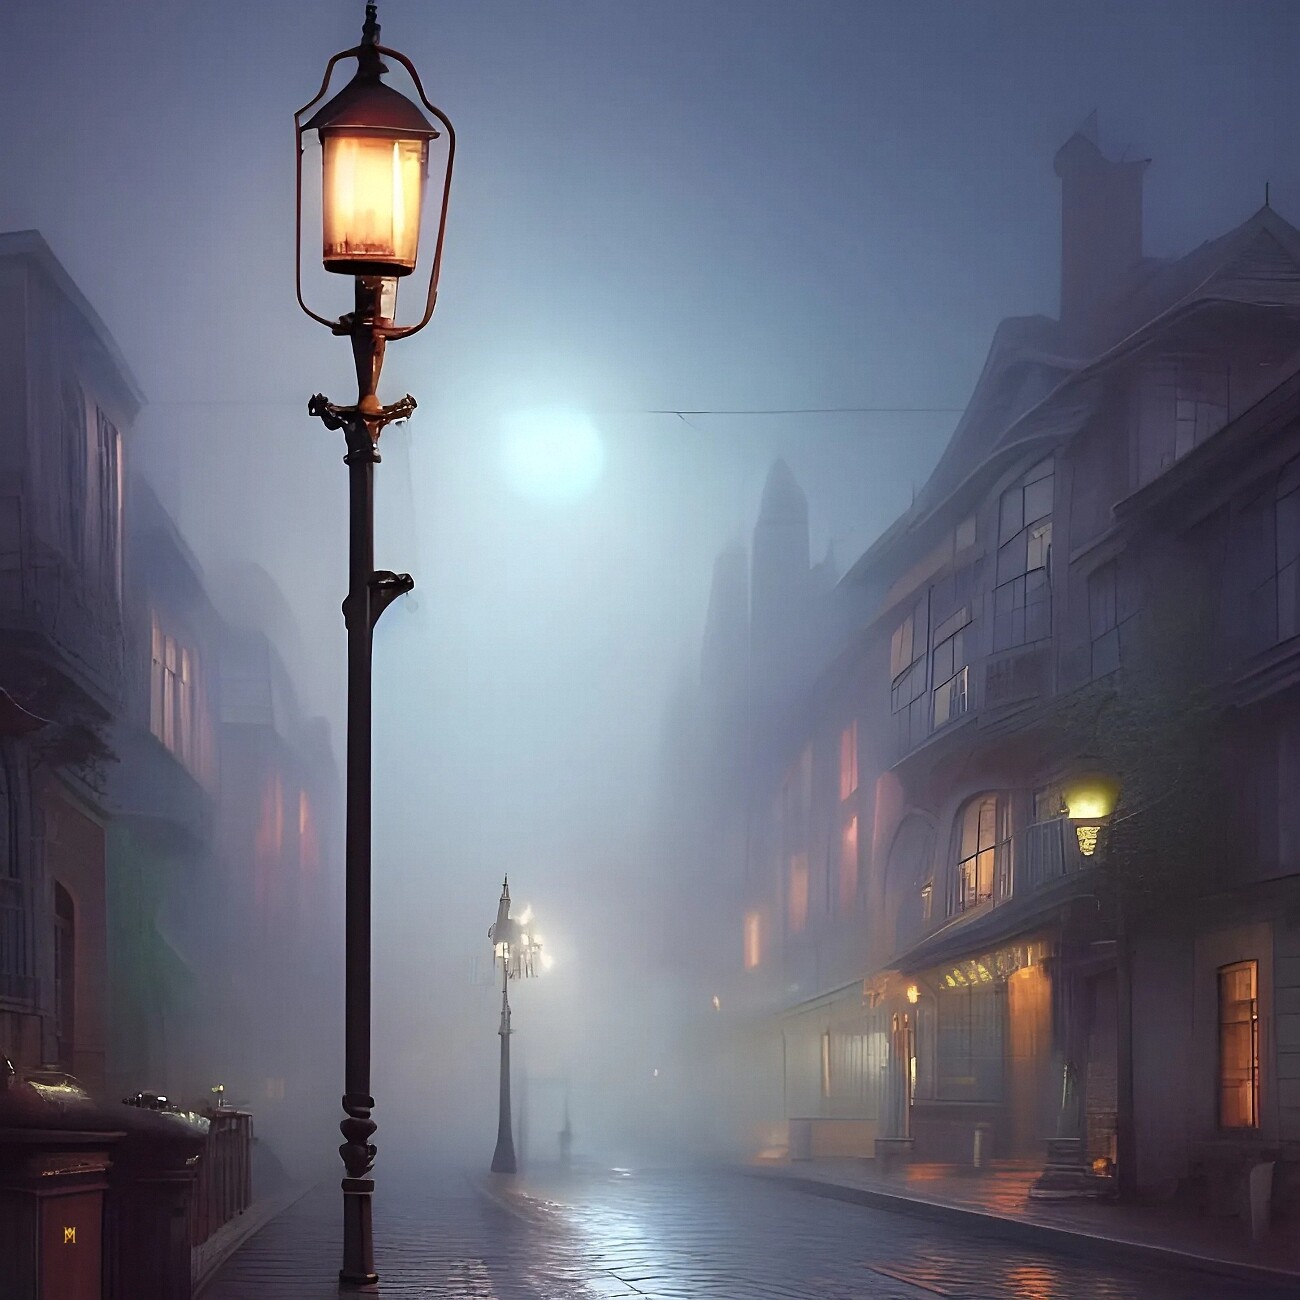 ArtStation - Street in the evening fog